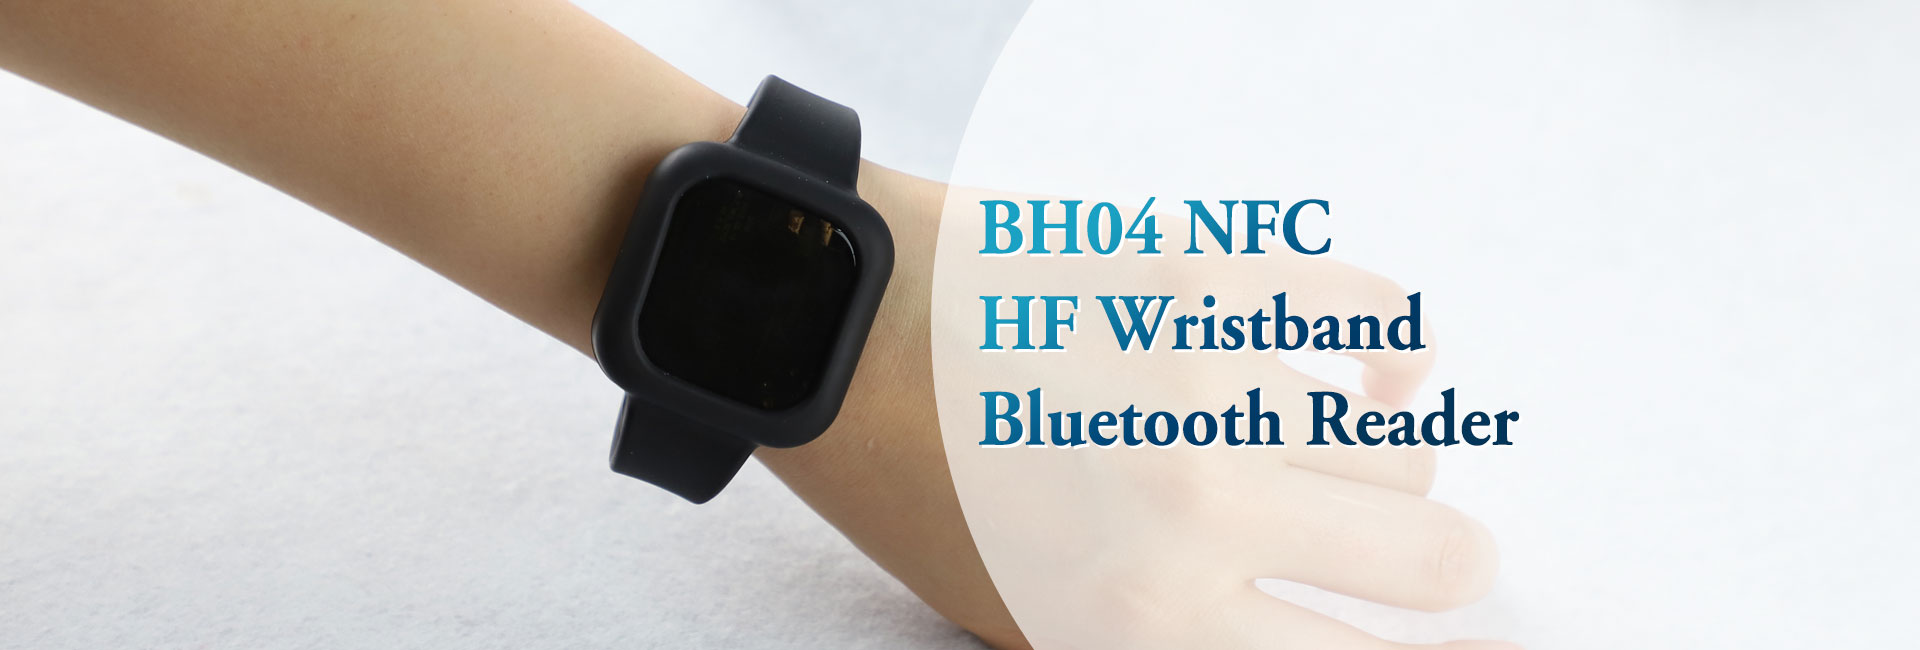 BH04 NFC高频writband Bluetooth Reader